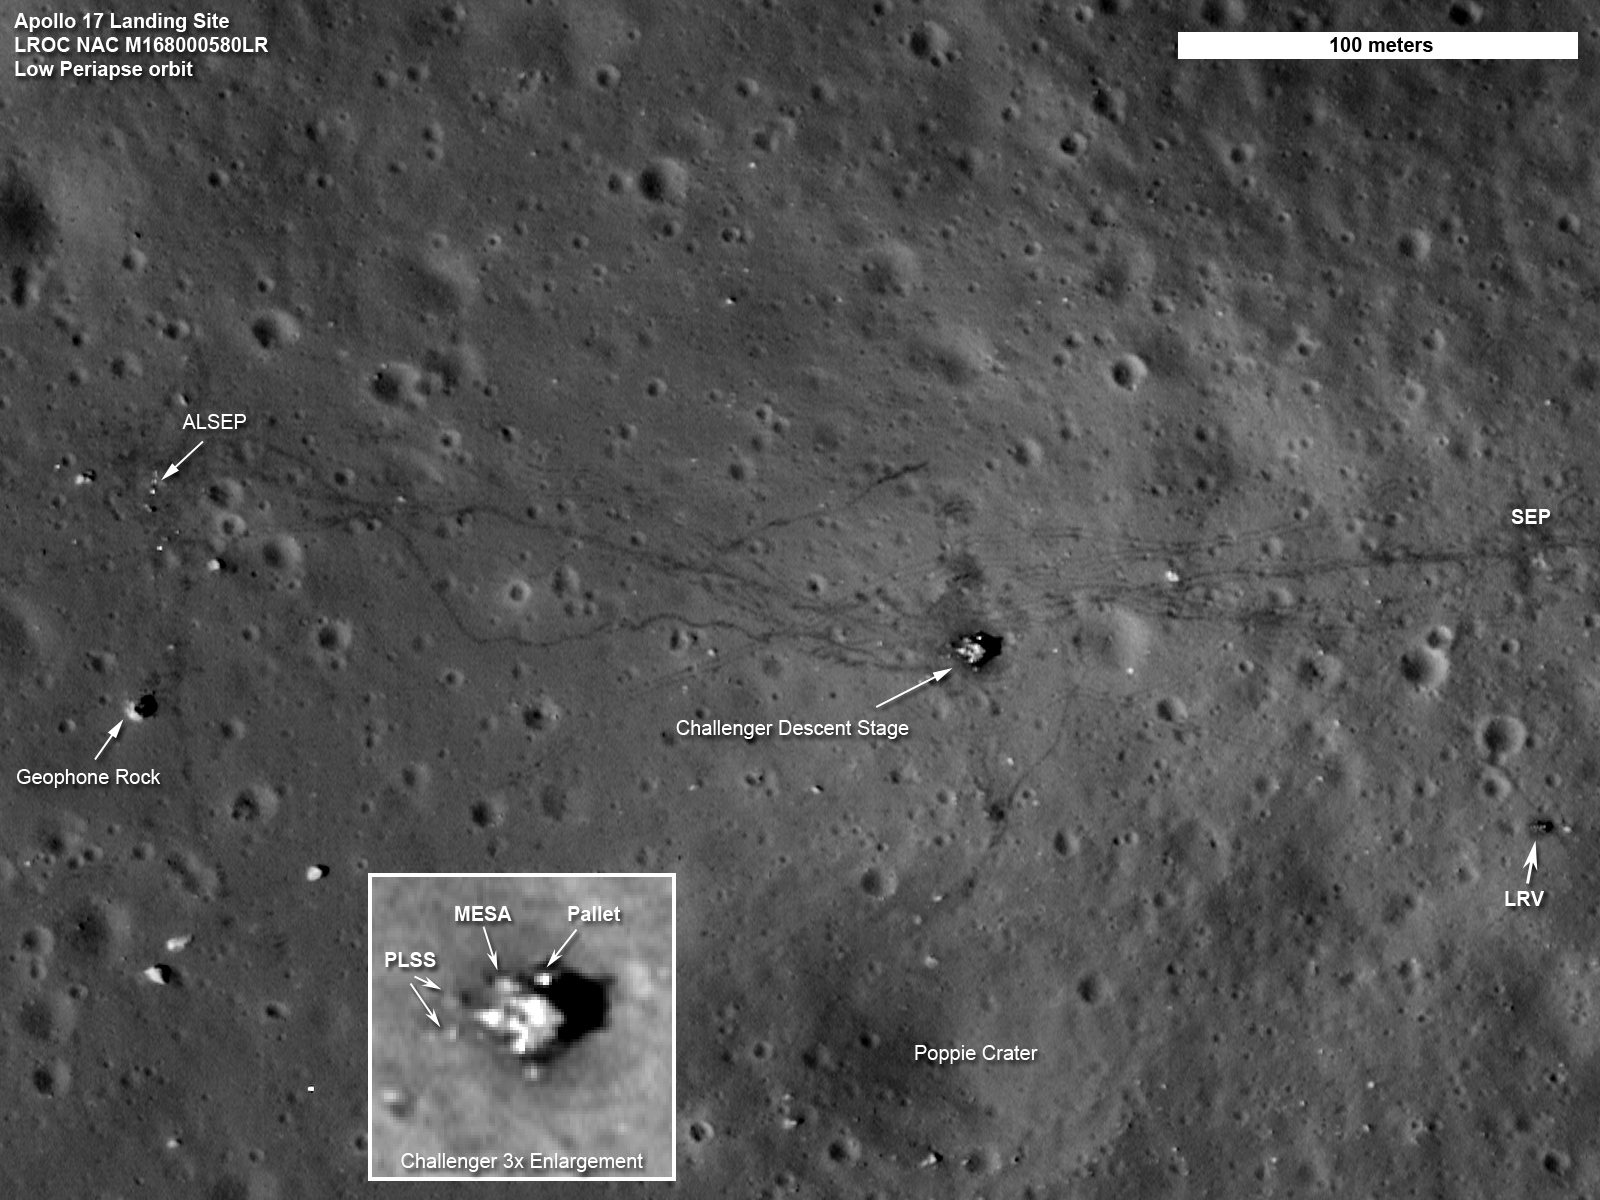 apollo17-moon-landing-site-lro-image.jpg